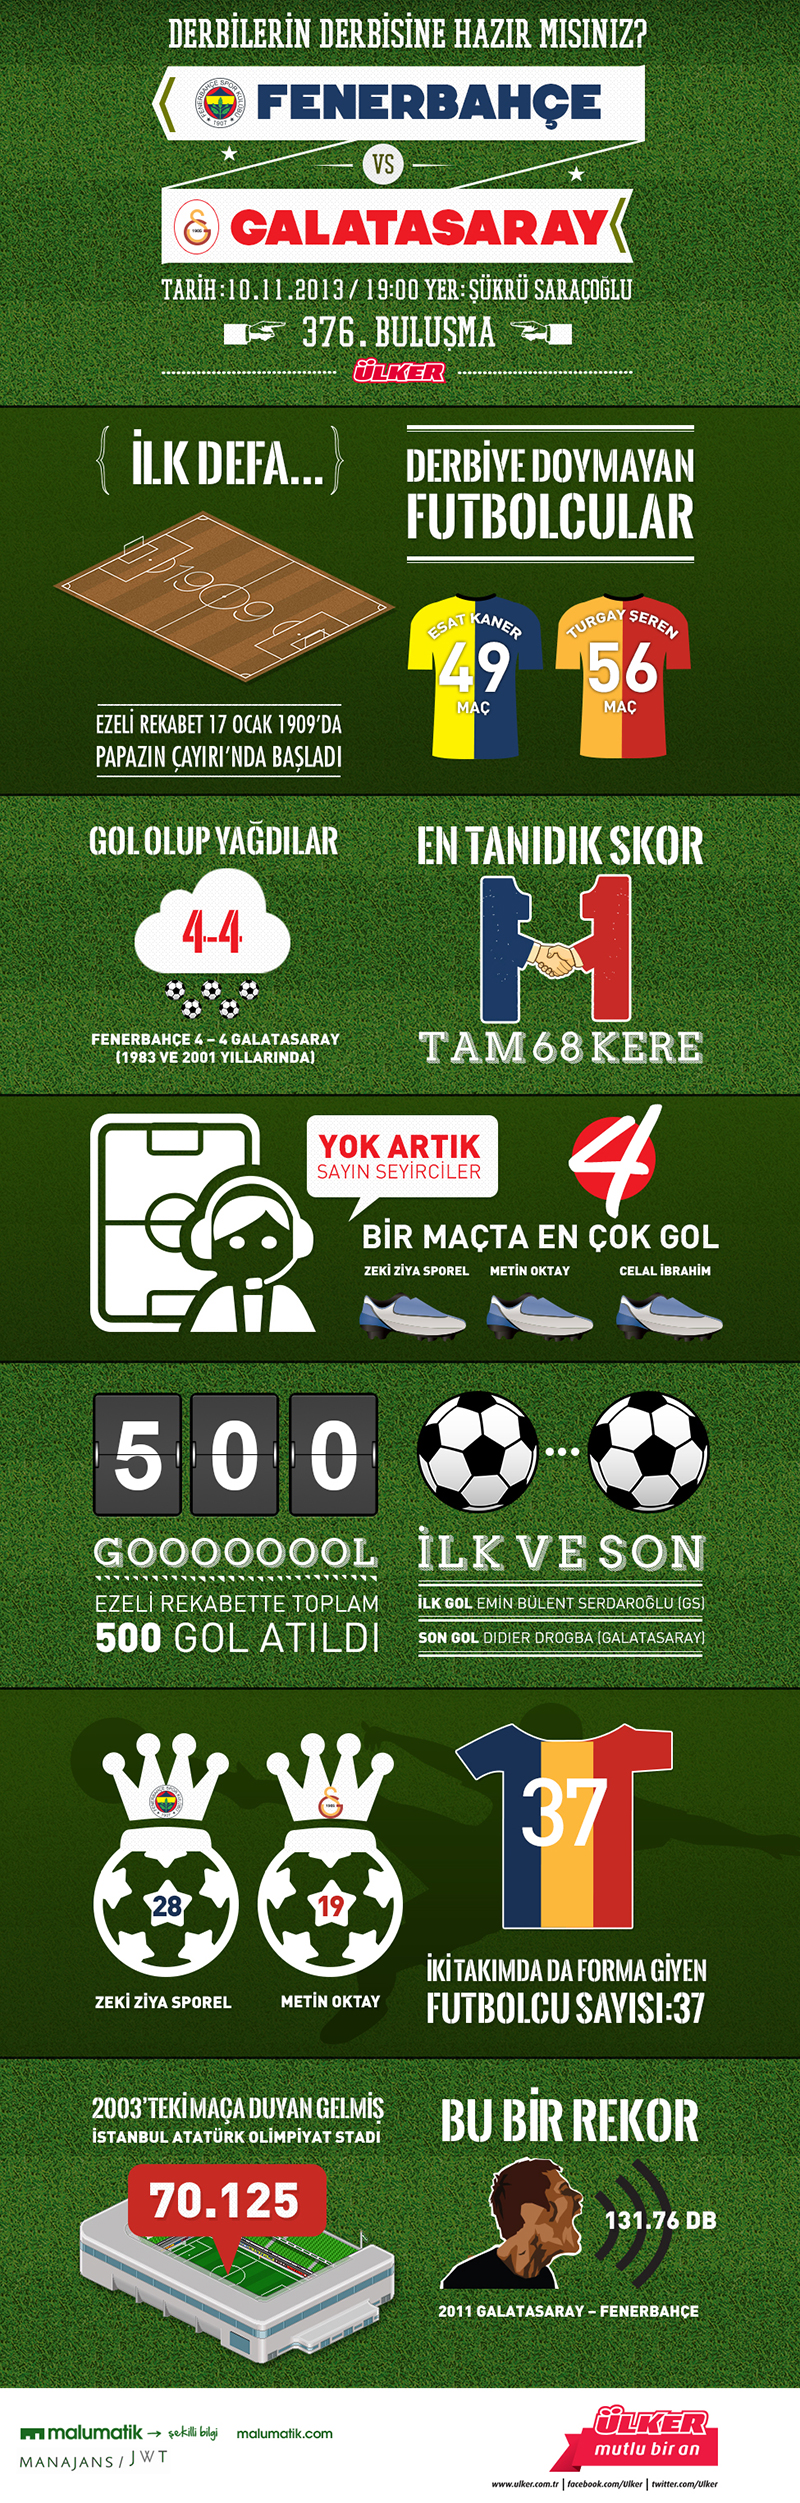 Galatasaray Vs Fenerbahçe İnfografik